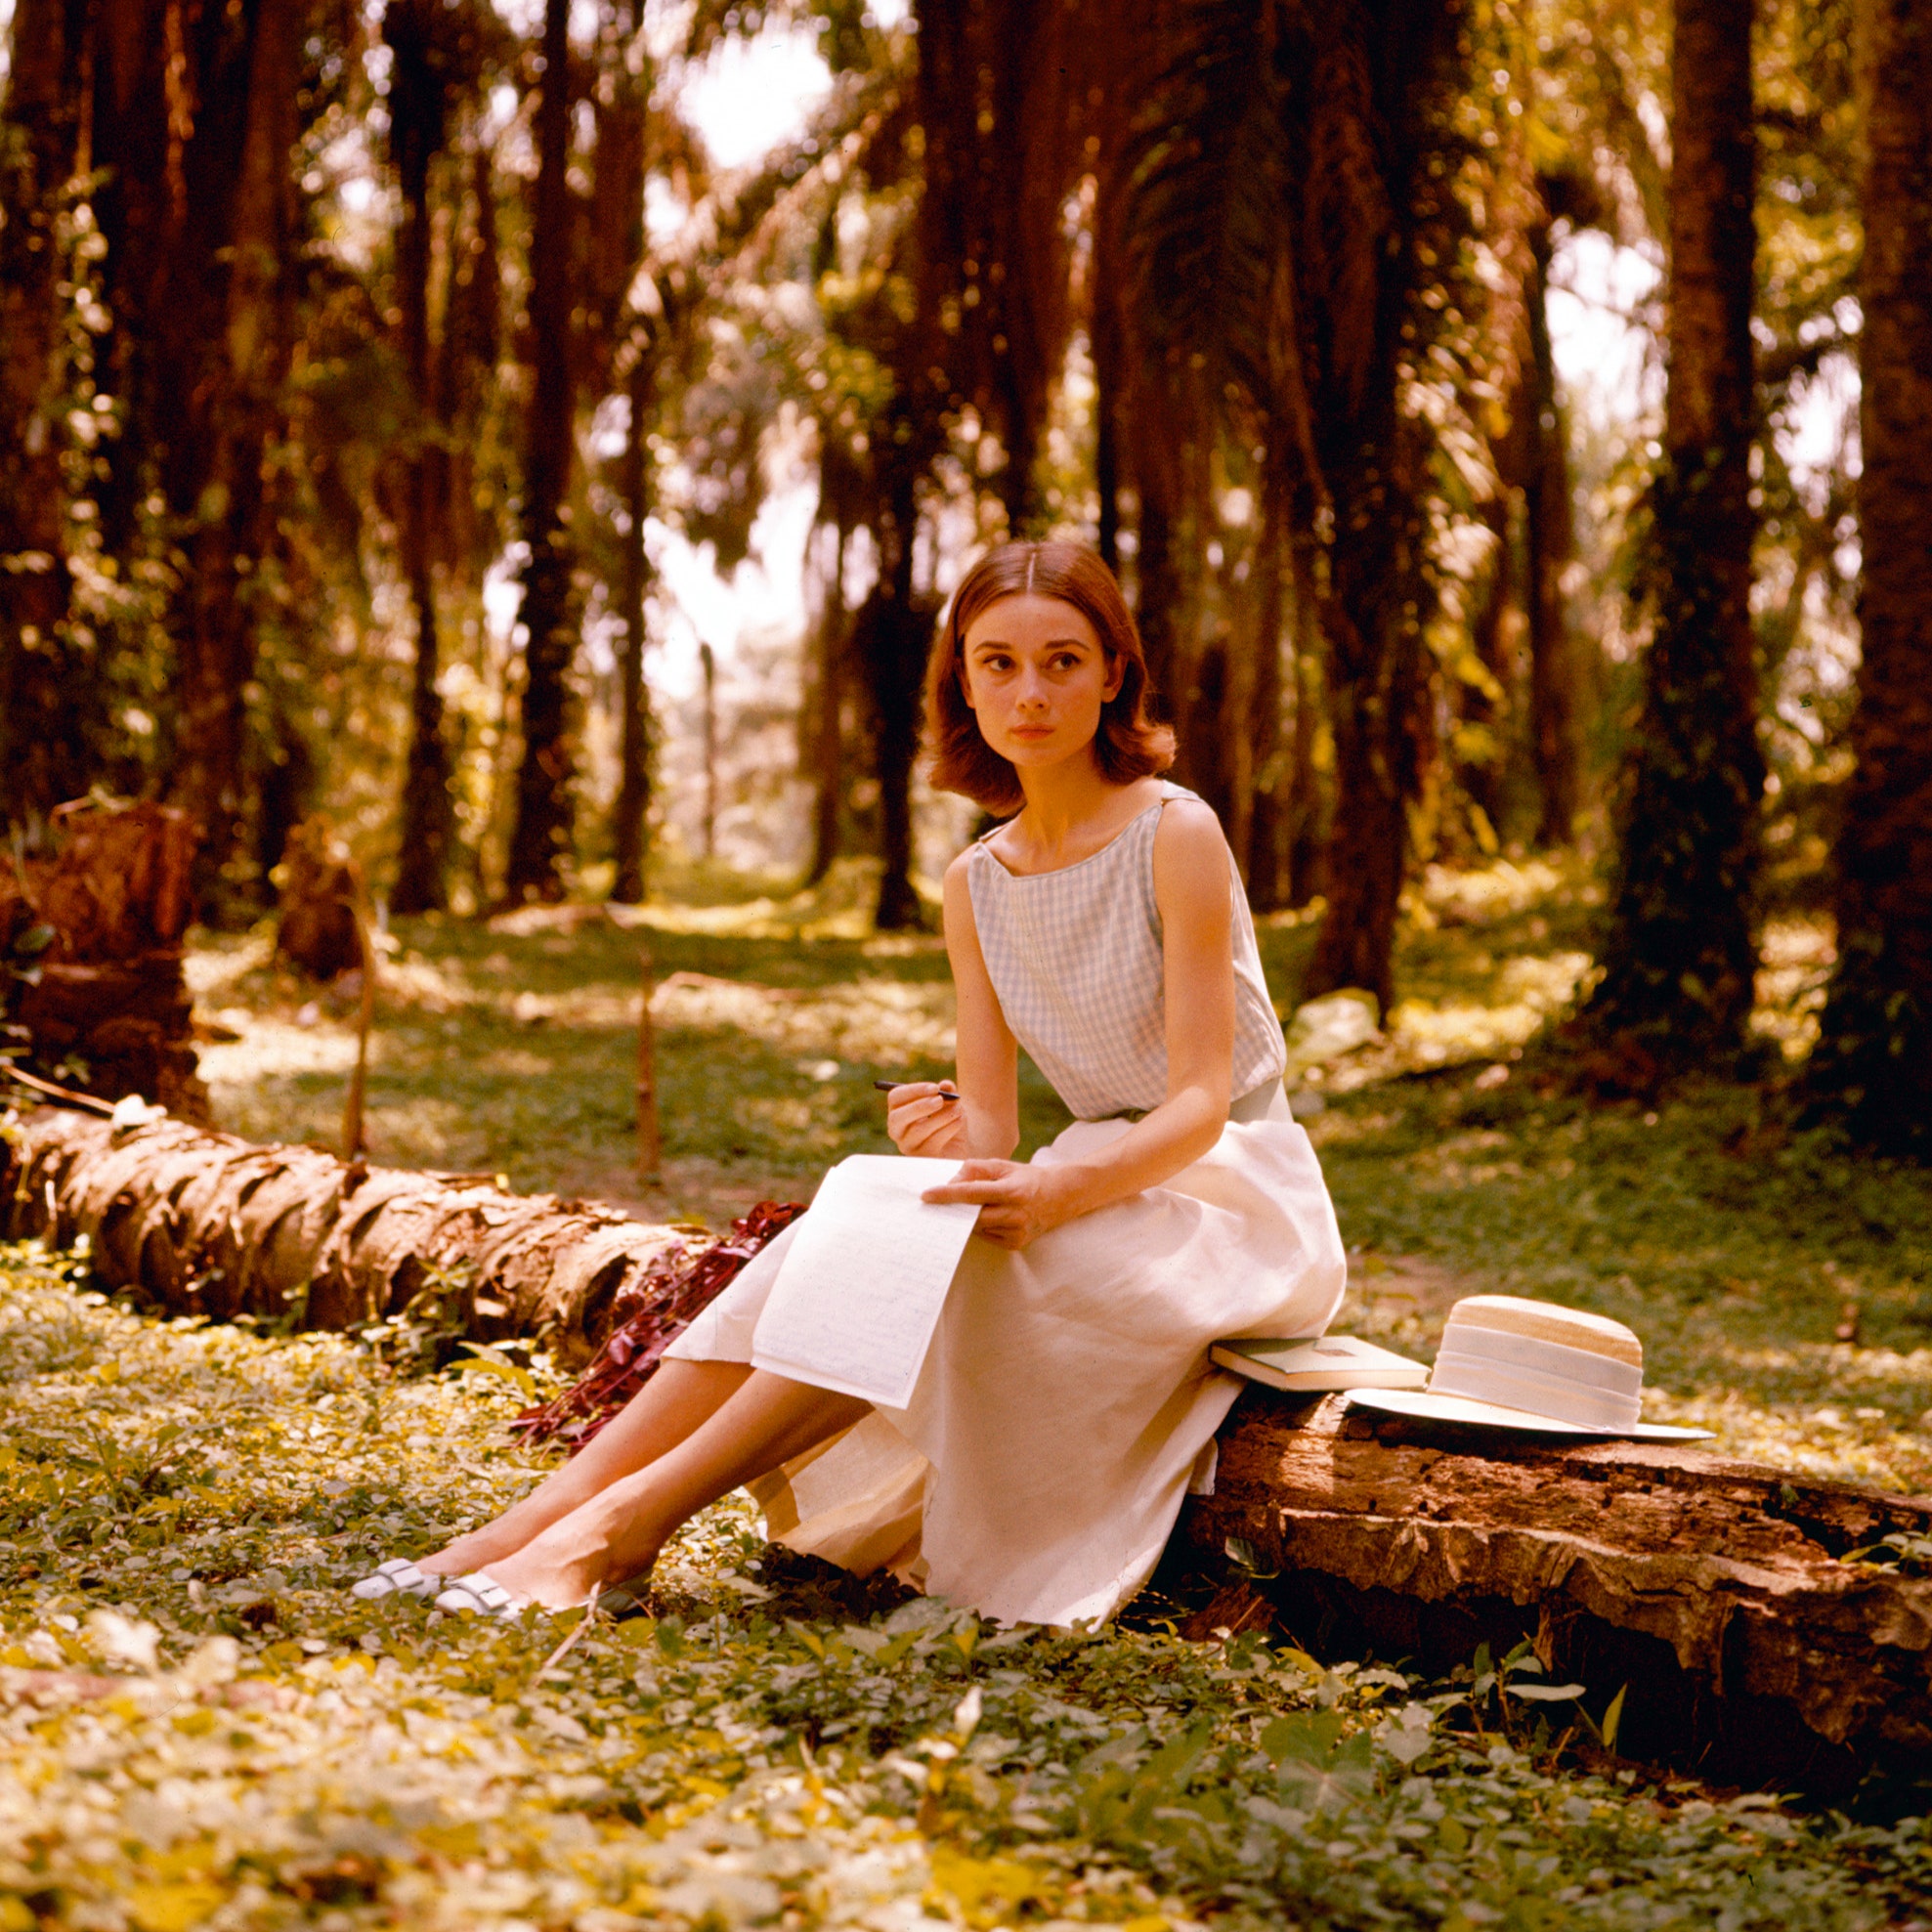 Belgian born actress Audrey Hepburn  writing a letter in a palm grove circa 1955.